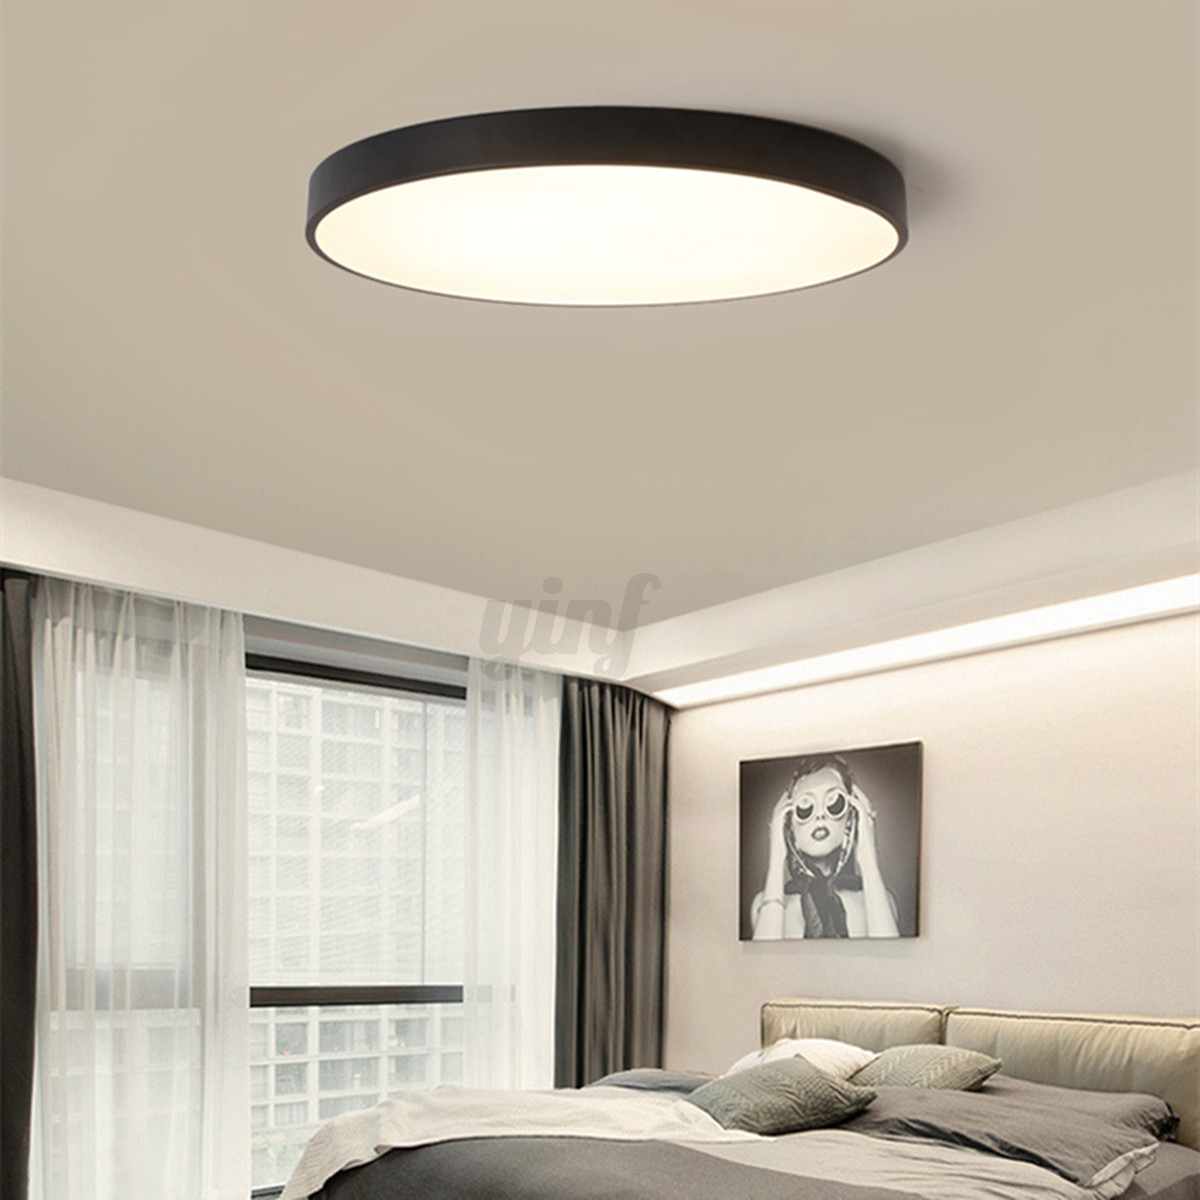 Bedroom Ceiling Light Fixture
 Modern LED Round Ceiling Lamp Light Fixture Home Bedroom